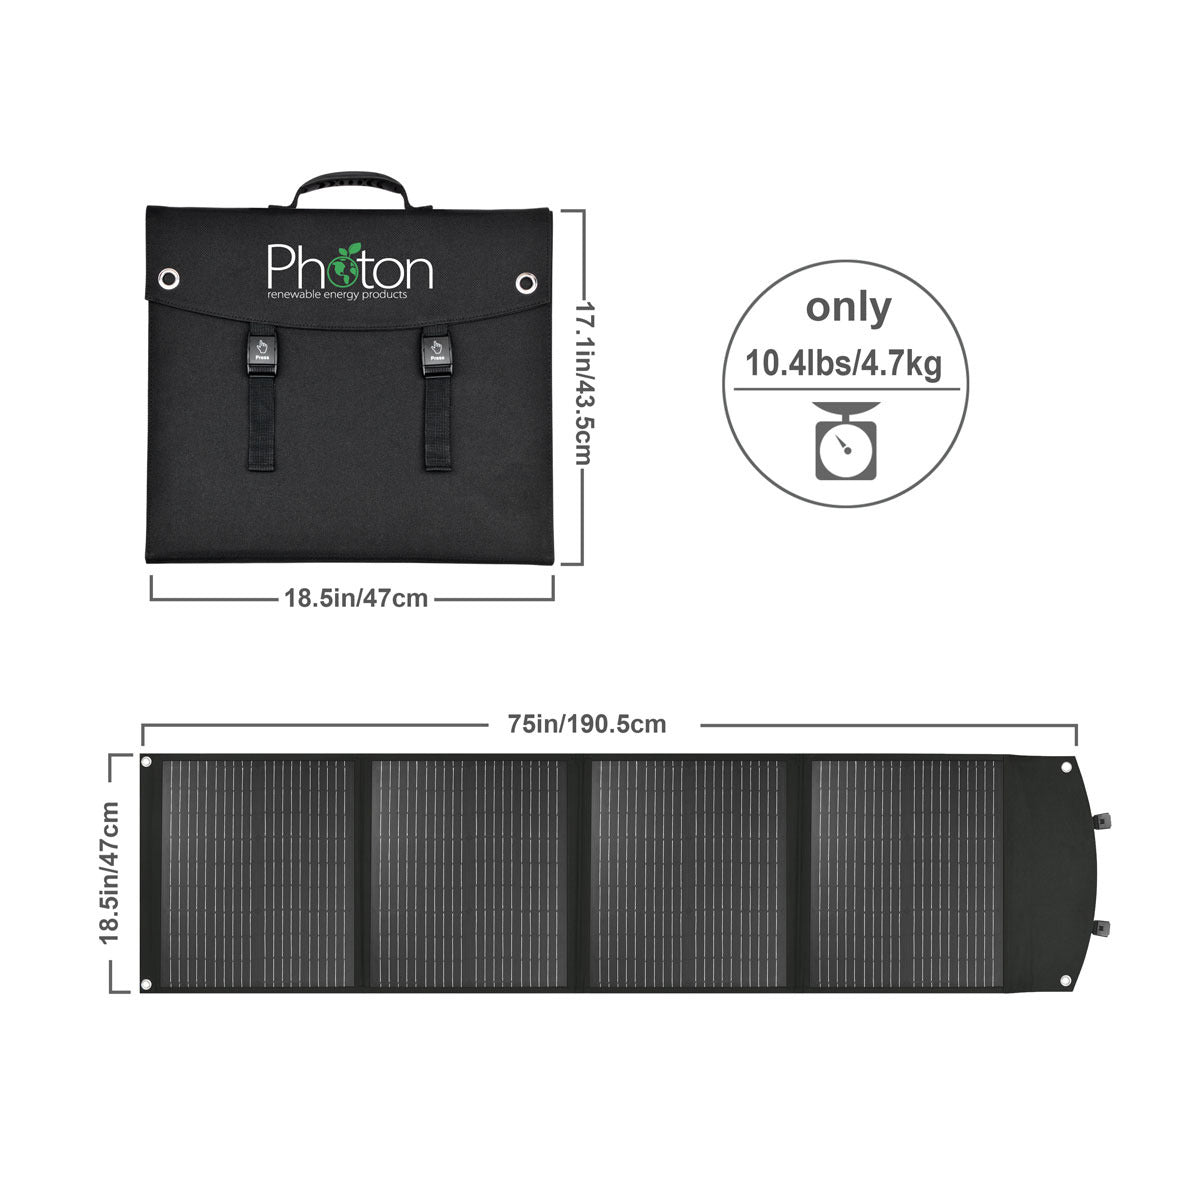 Photon 120W 19V Portable Monocrystalline Solar Panel